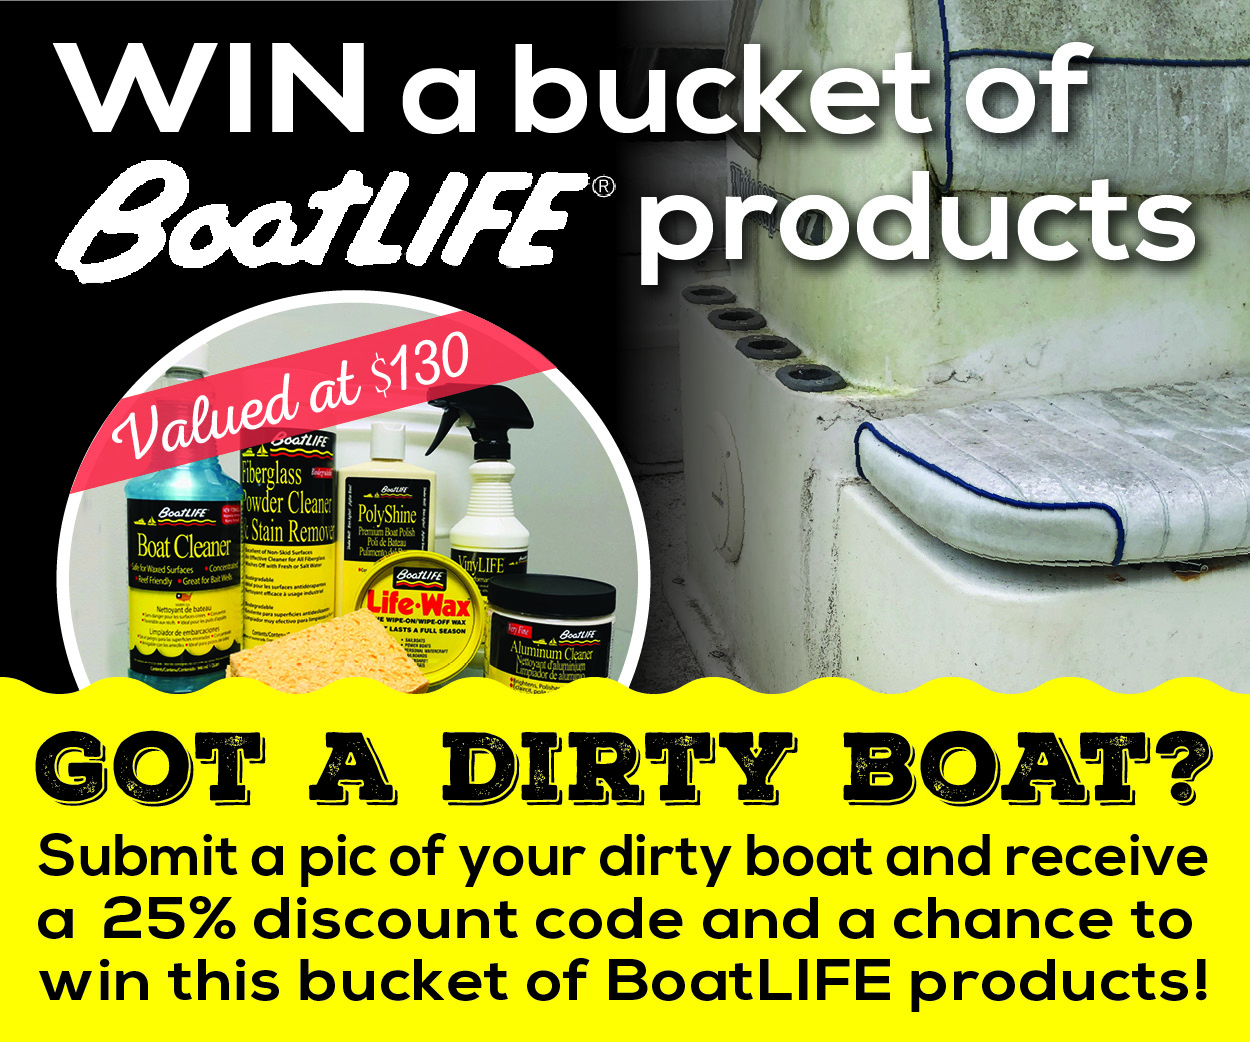 SpinSheet BoatLIFE dirty boat contest